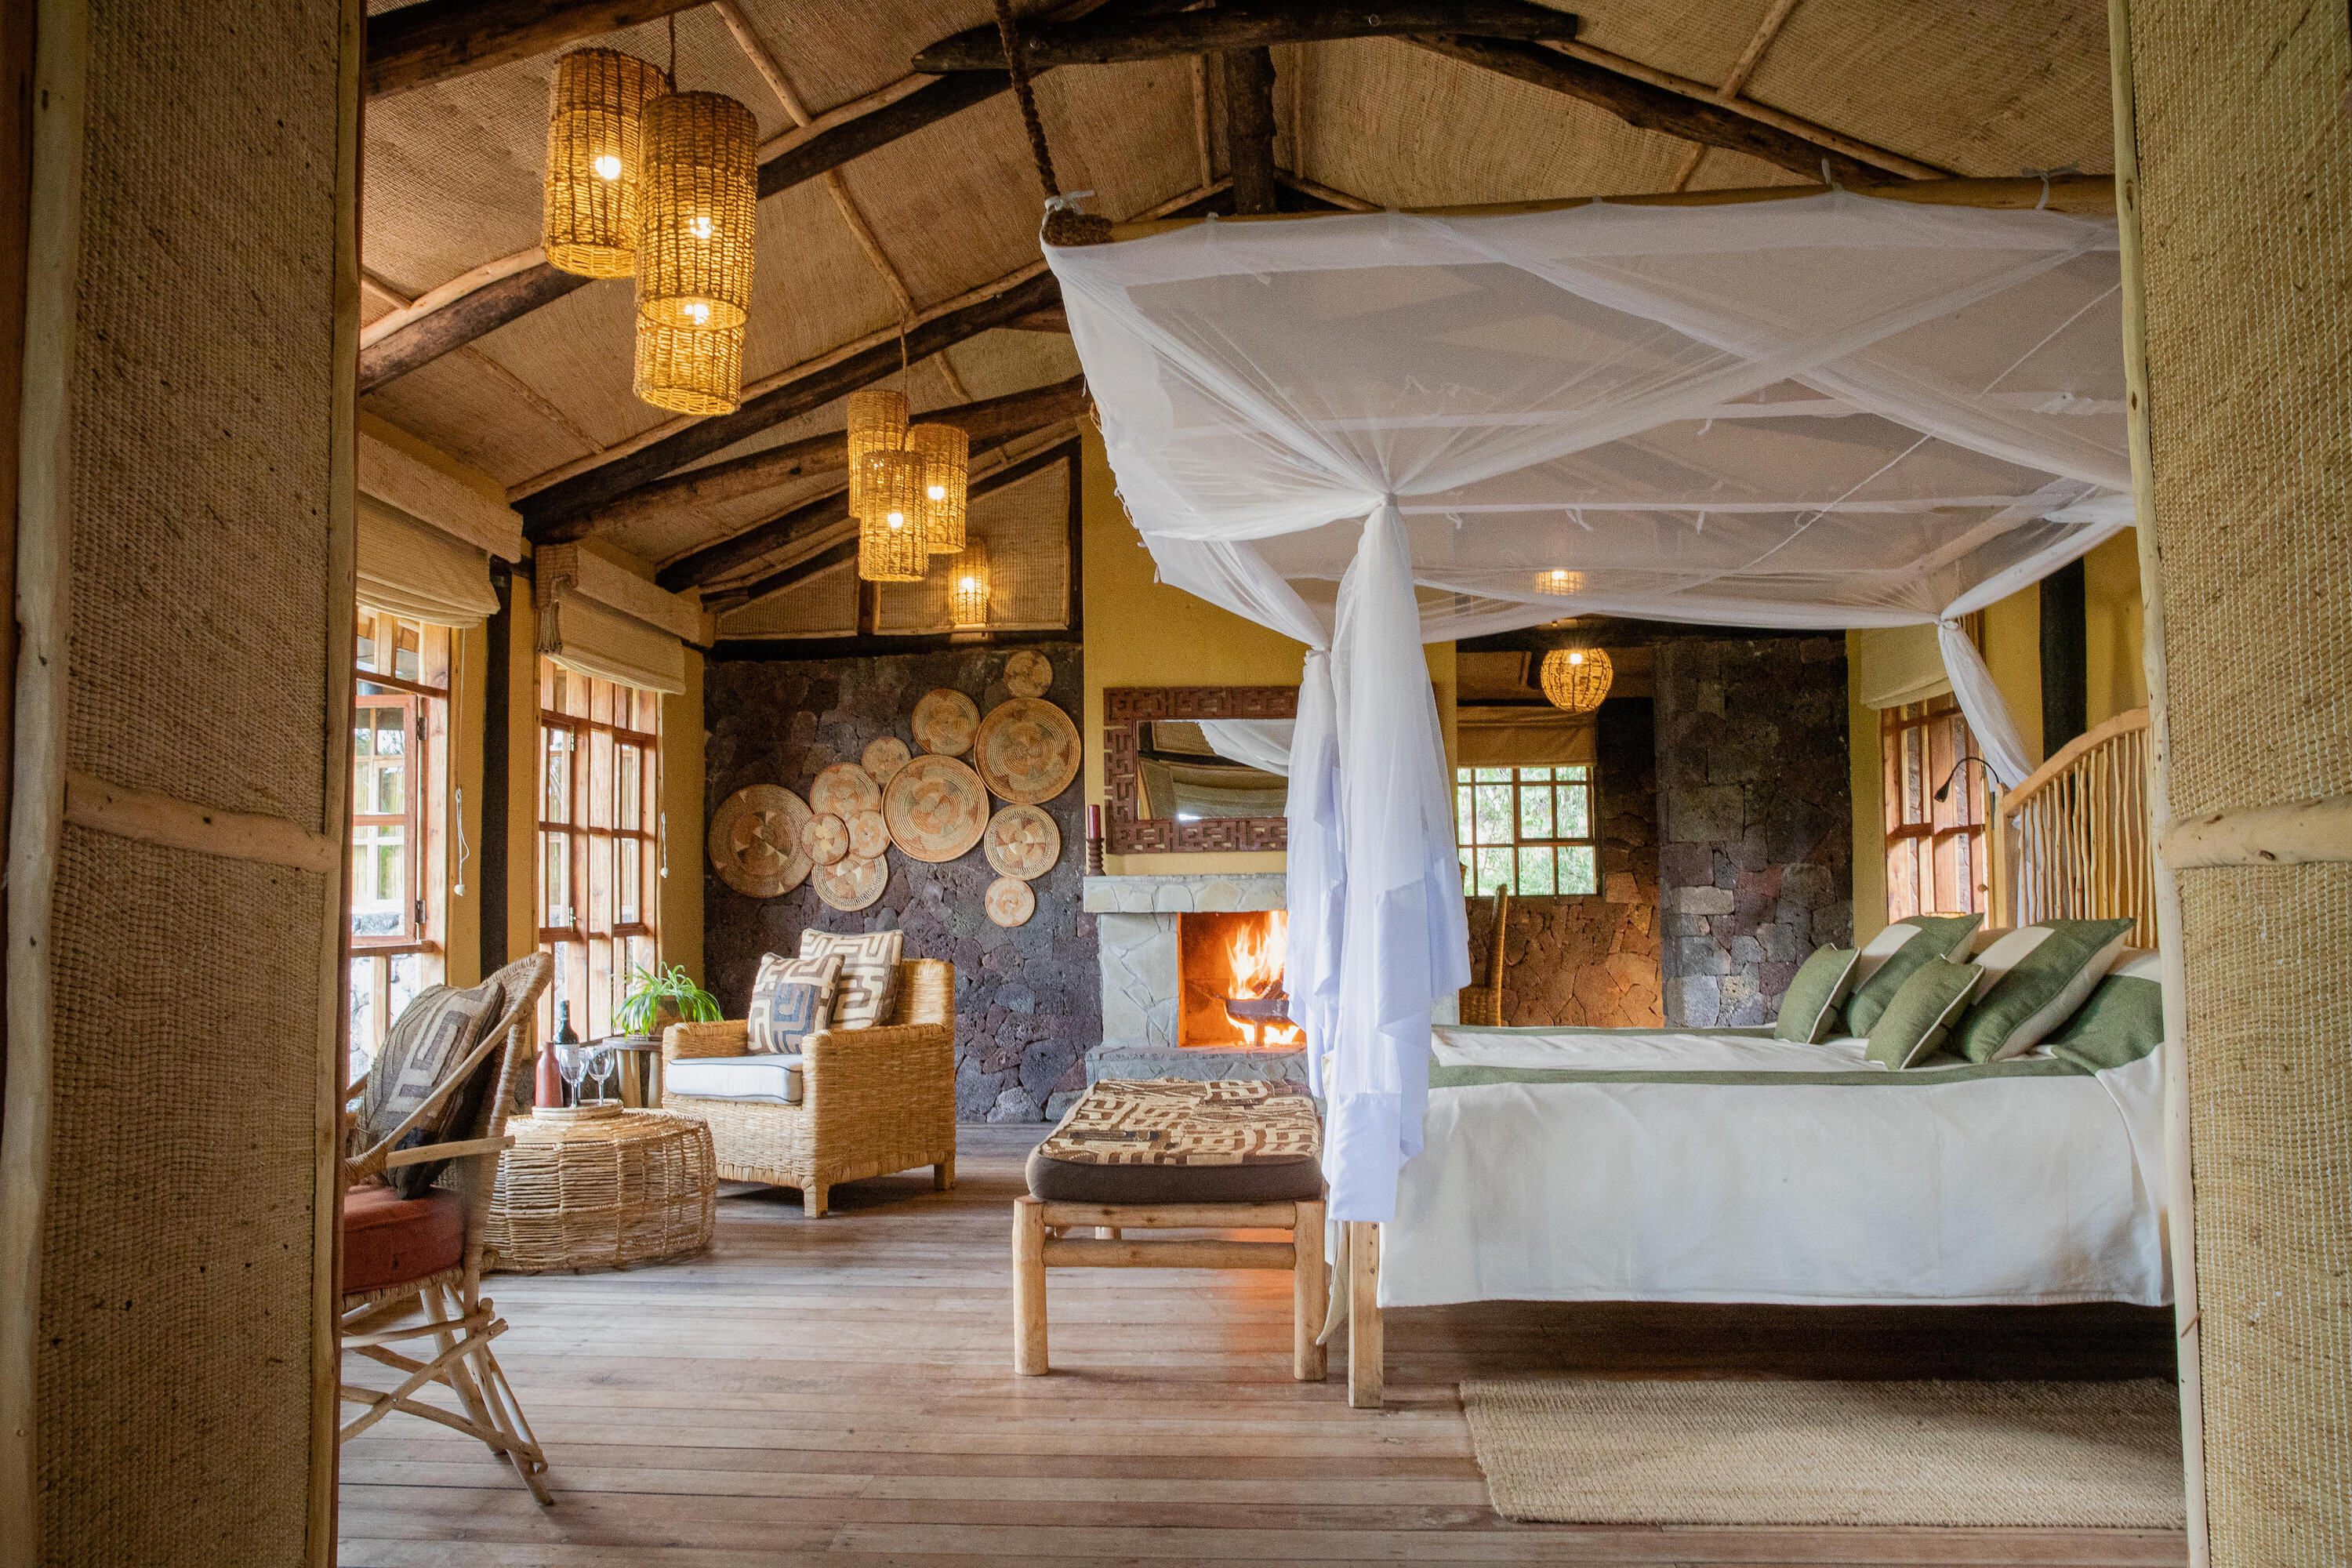 Bedrooms at Mount Gahinga Lodge